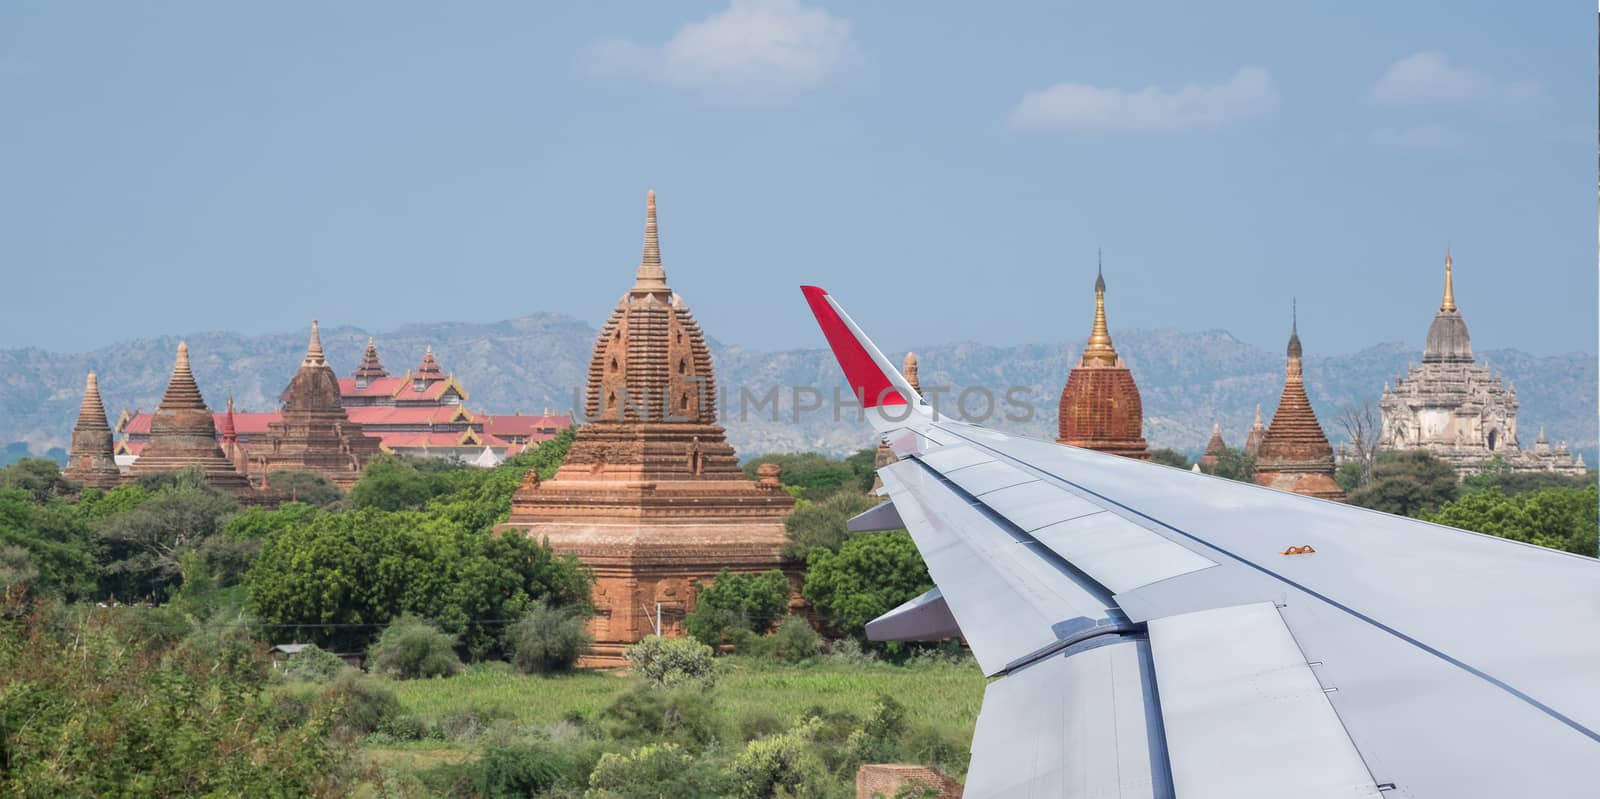 Pagoda in bagan Myanmar View from Airplane Window by Surasak